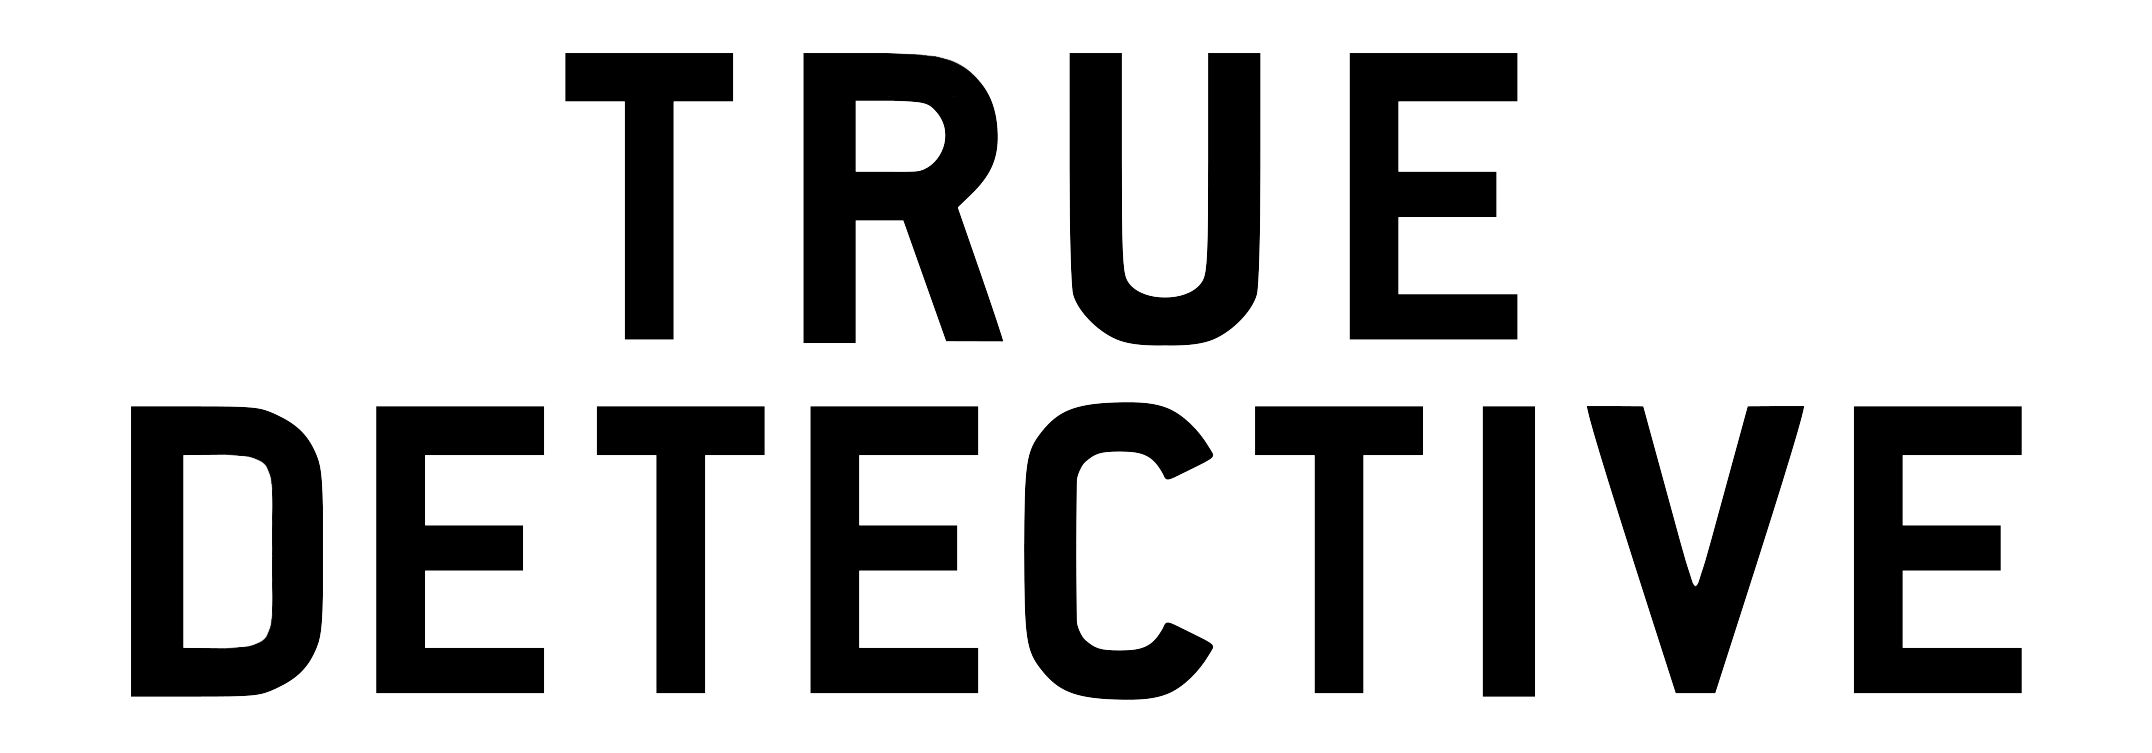 Detective Logo - File:True Detective logo.png - Wikimedia Commons